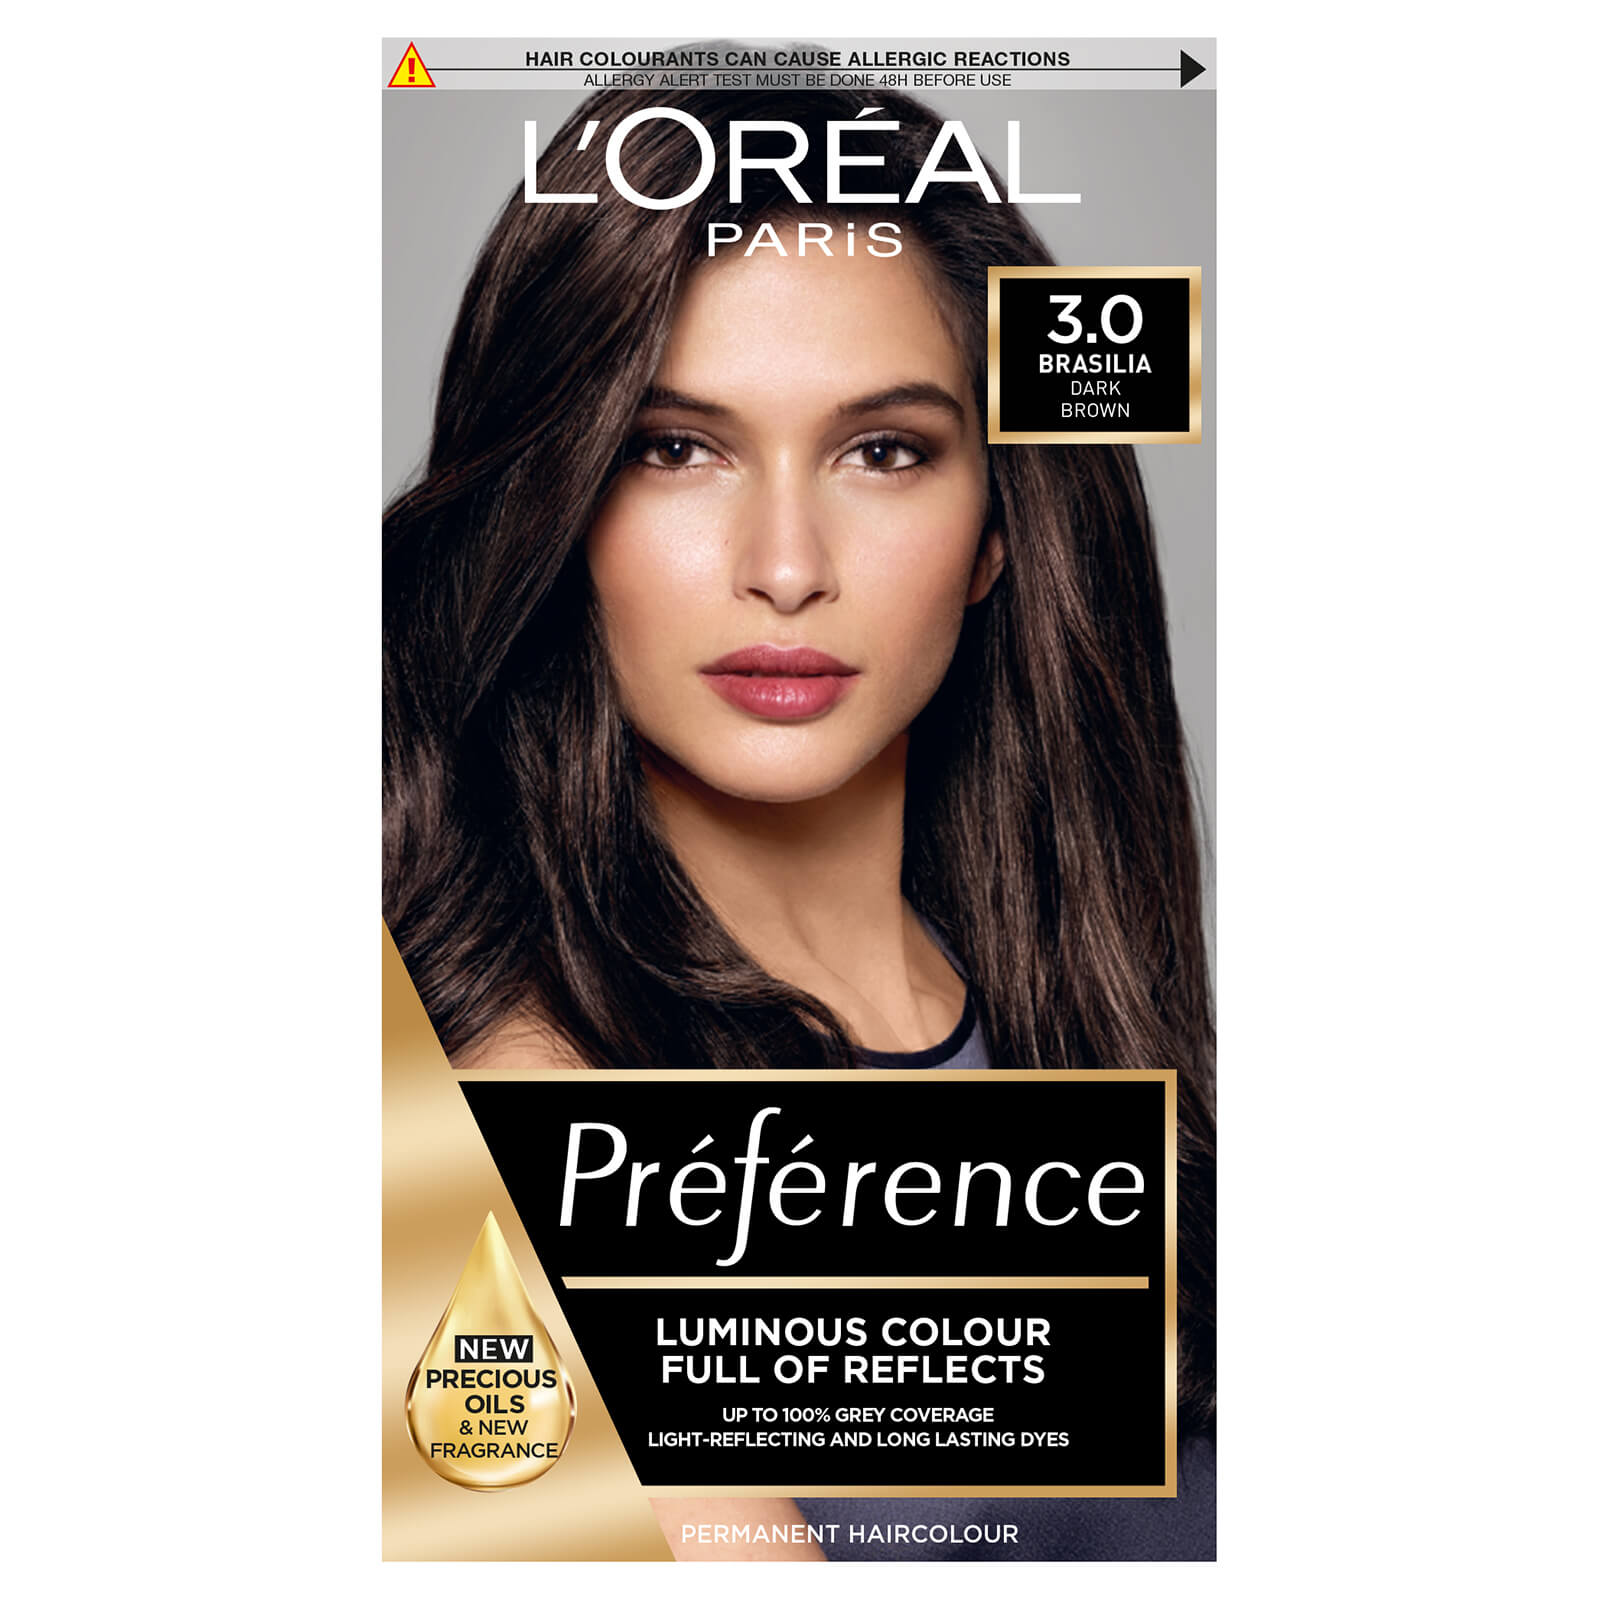 L'Oréal Paris Préférence Infinia Hair Dye (Various Shades) - 3.0 Brasilia Dark Brown